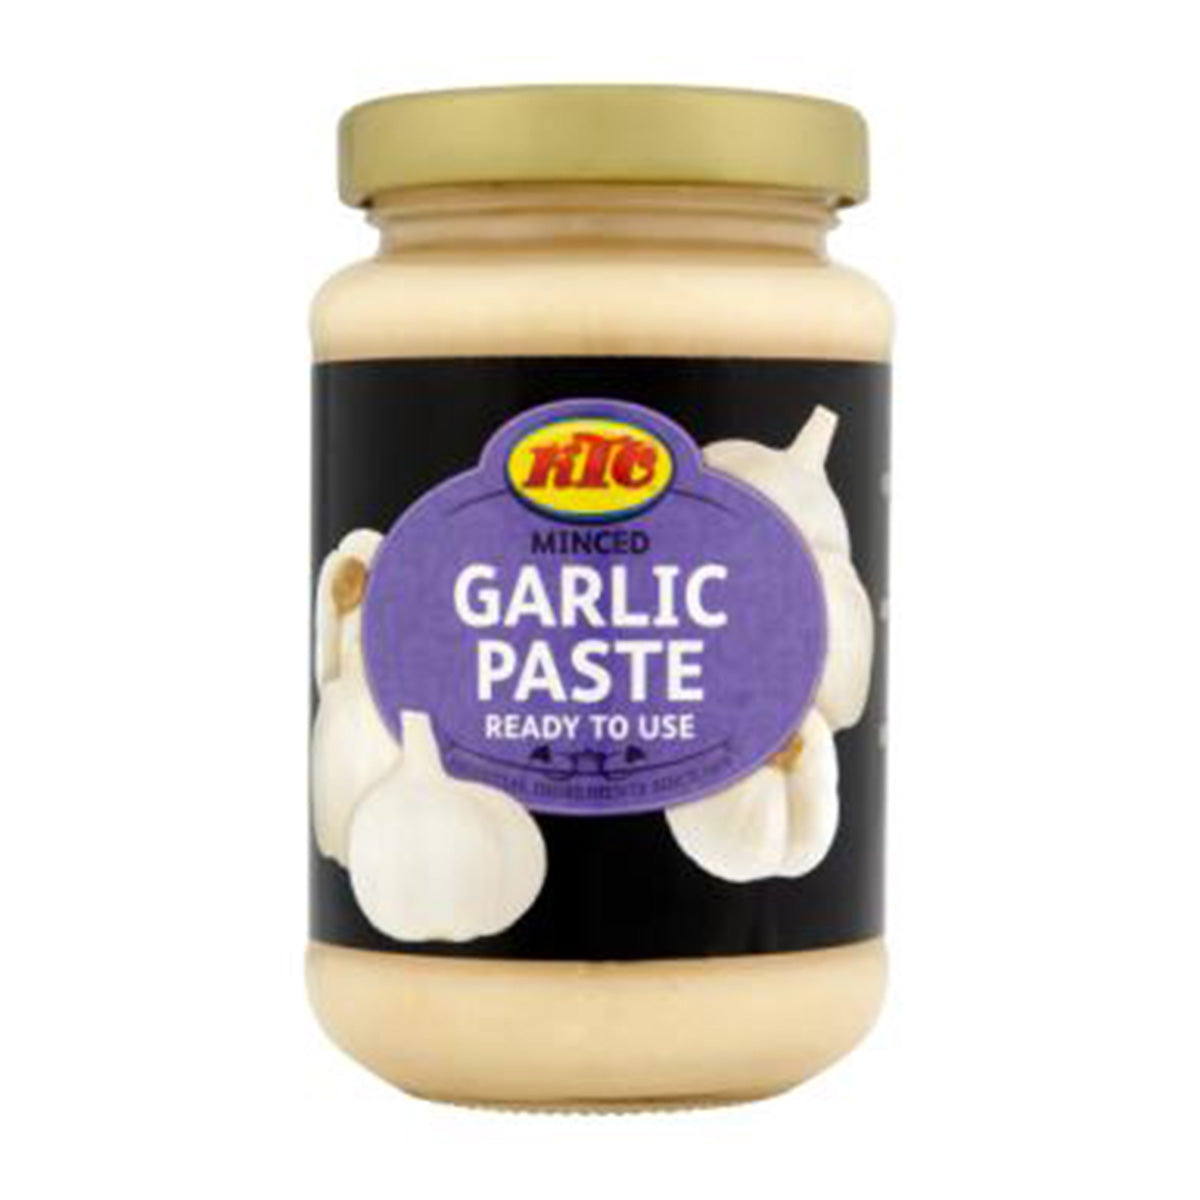 A jar of KTC - Minced Garlic Paste - 210g on a white background.